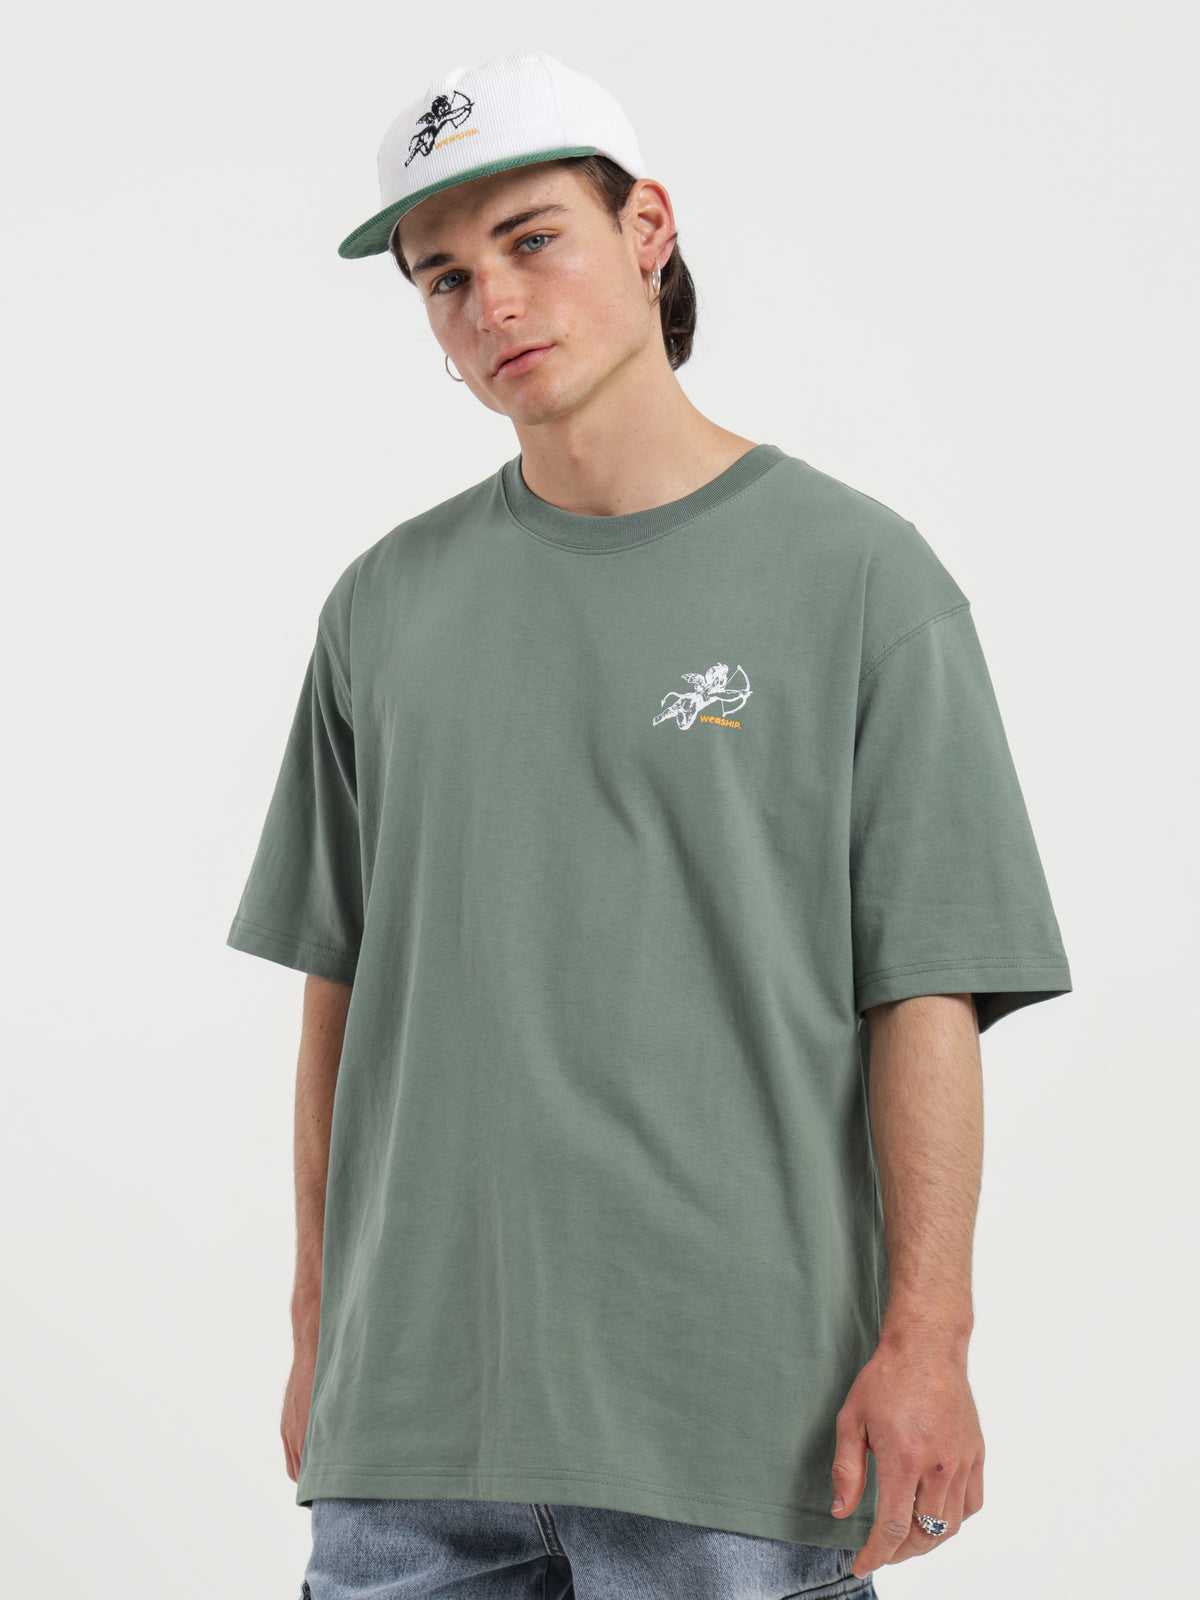 Cherub T-Shirt in Green